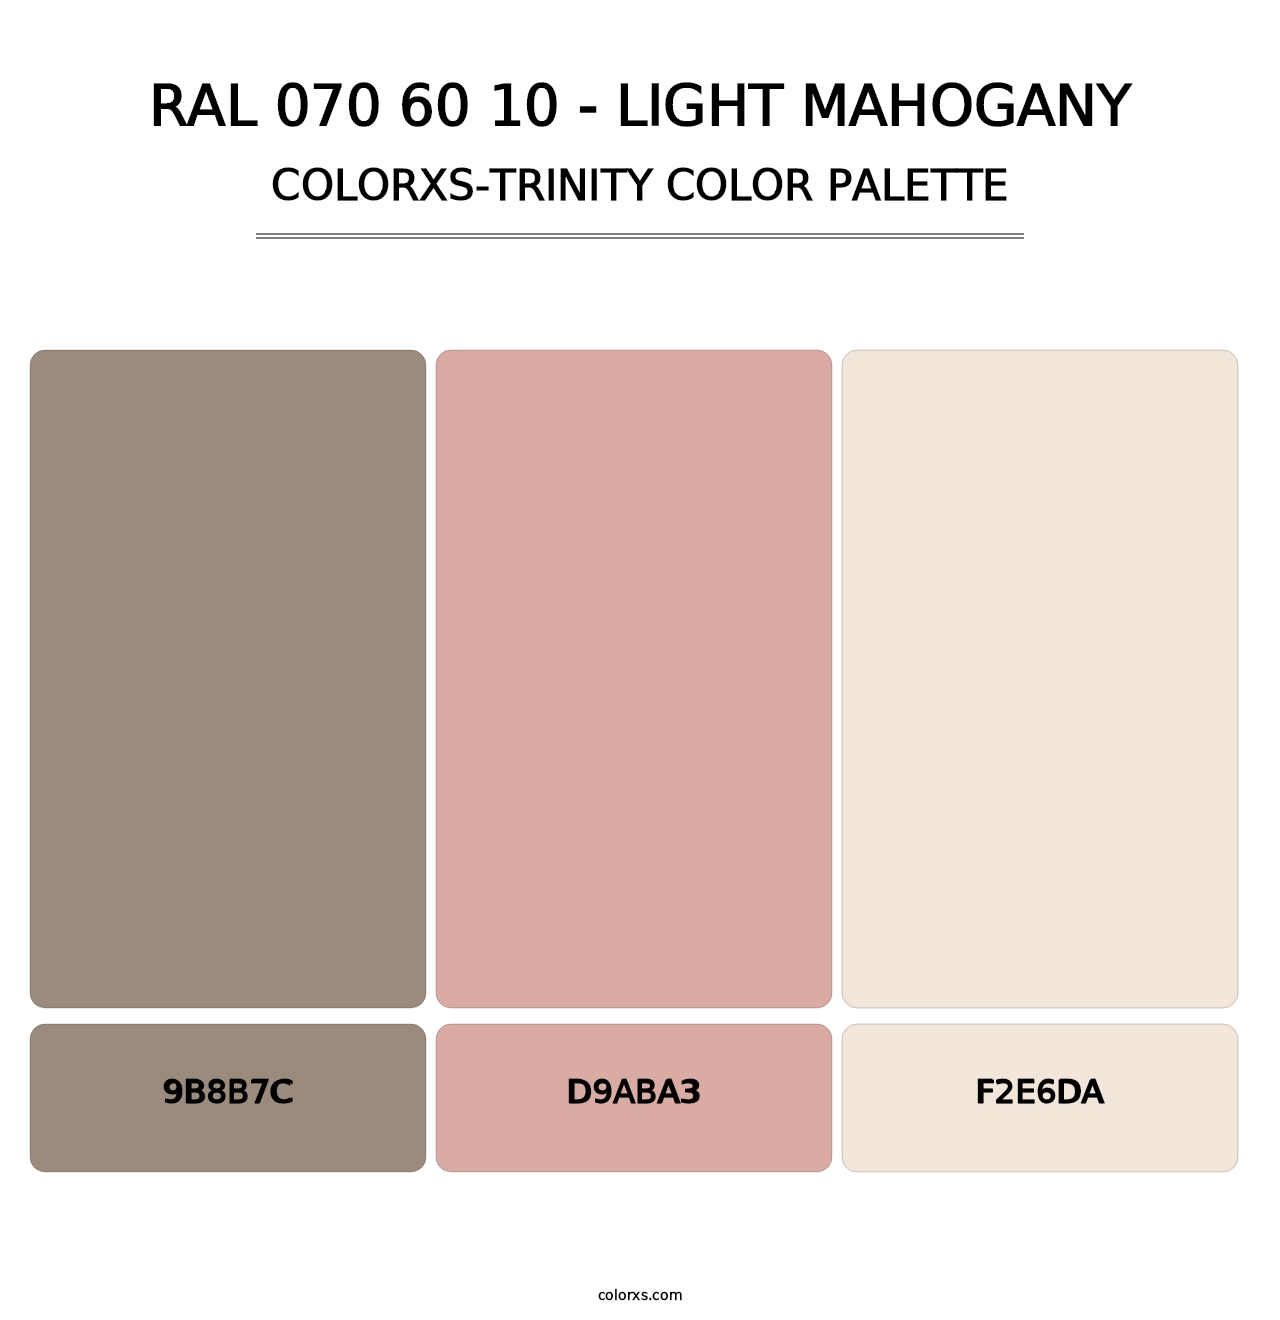 RAL 070 60 10 - Light Mahogany - Colorxs Trinity Palette